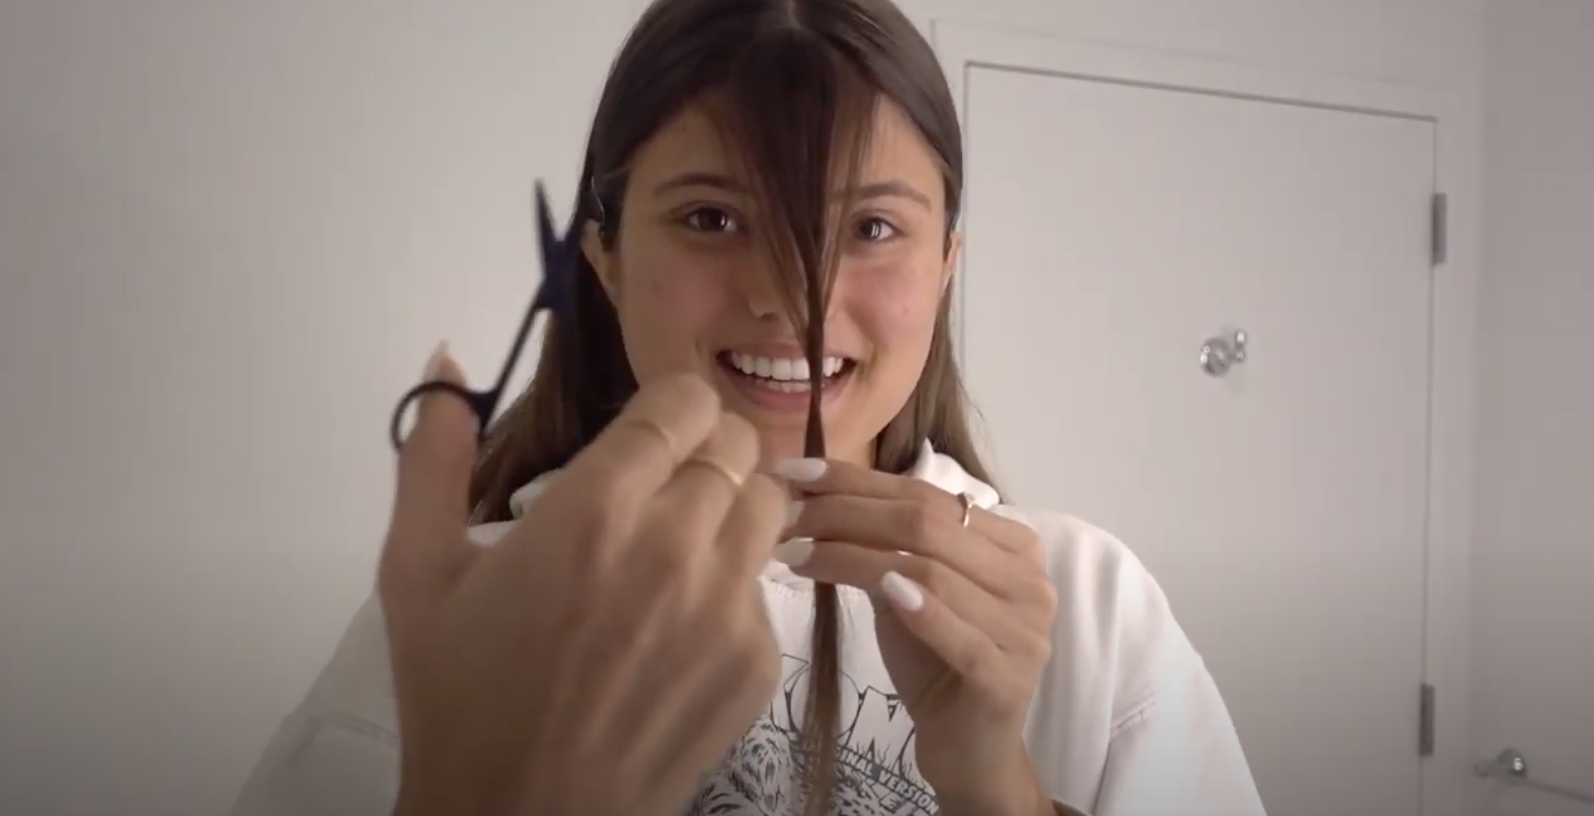 A woman in quarantine cutting her own bangs